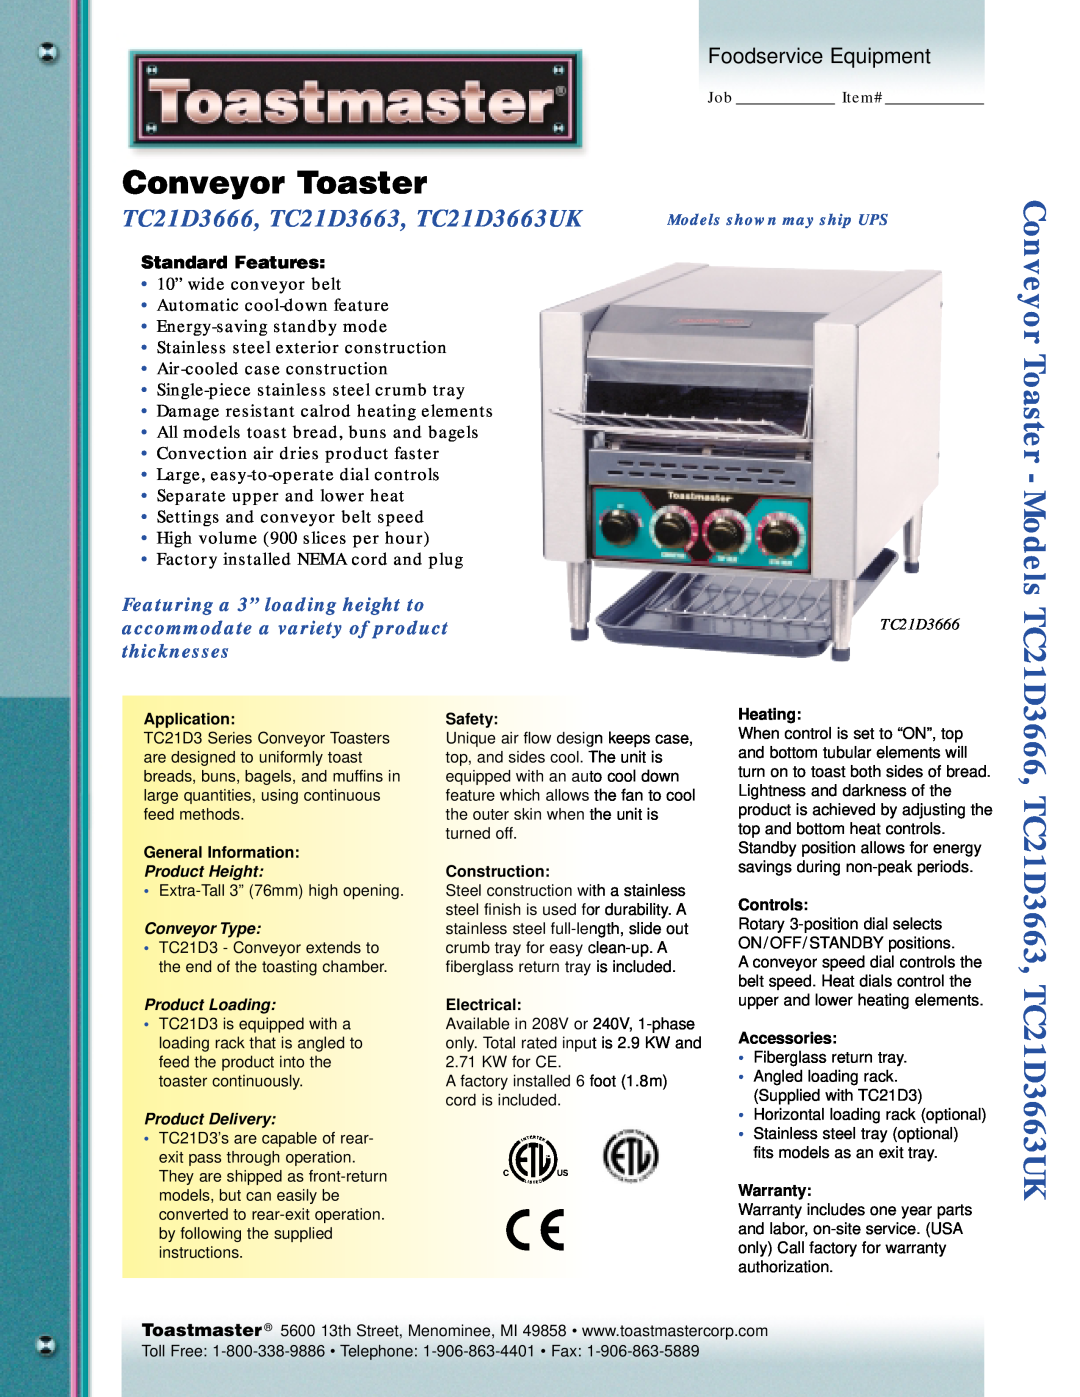 Toastmaster TC21D3666 warranty Conveyor Toaster, Standard Features, TC21D3663, TC21D3663UK, Foodservice Equipment 